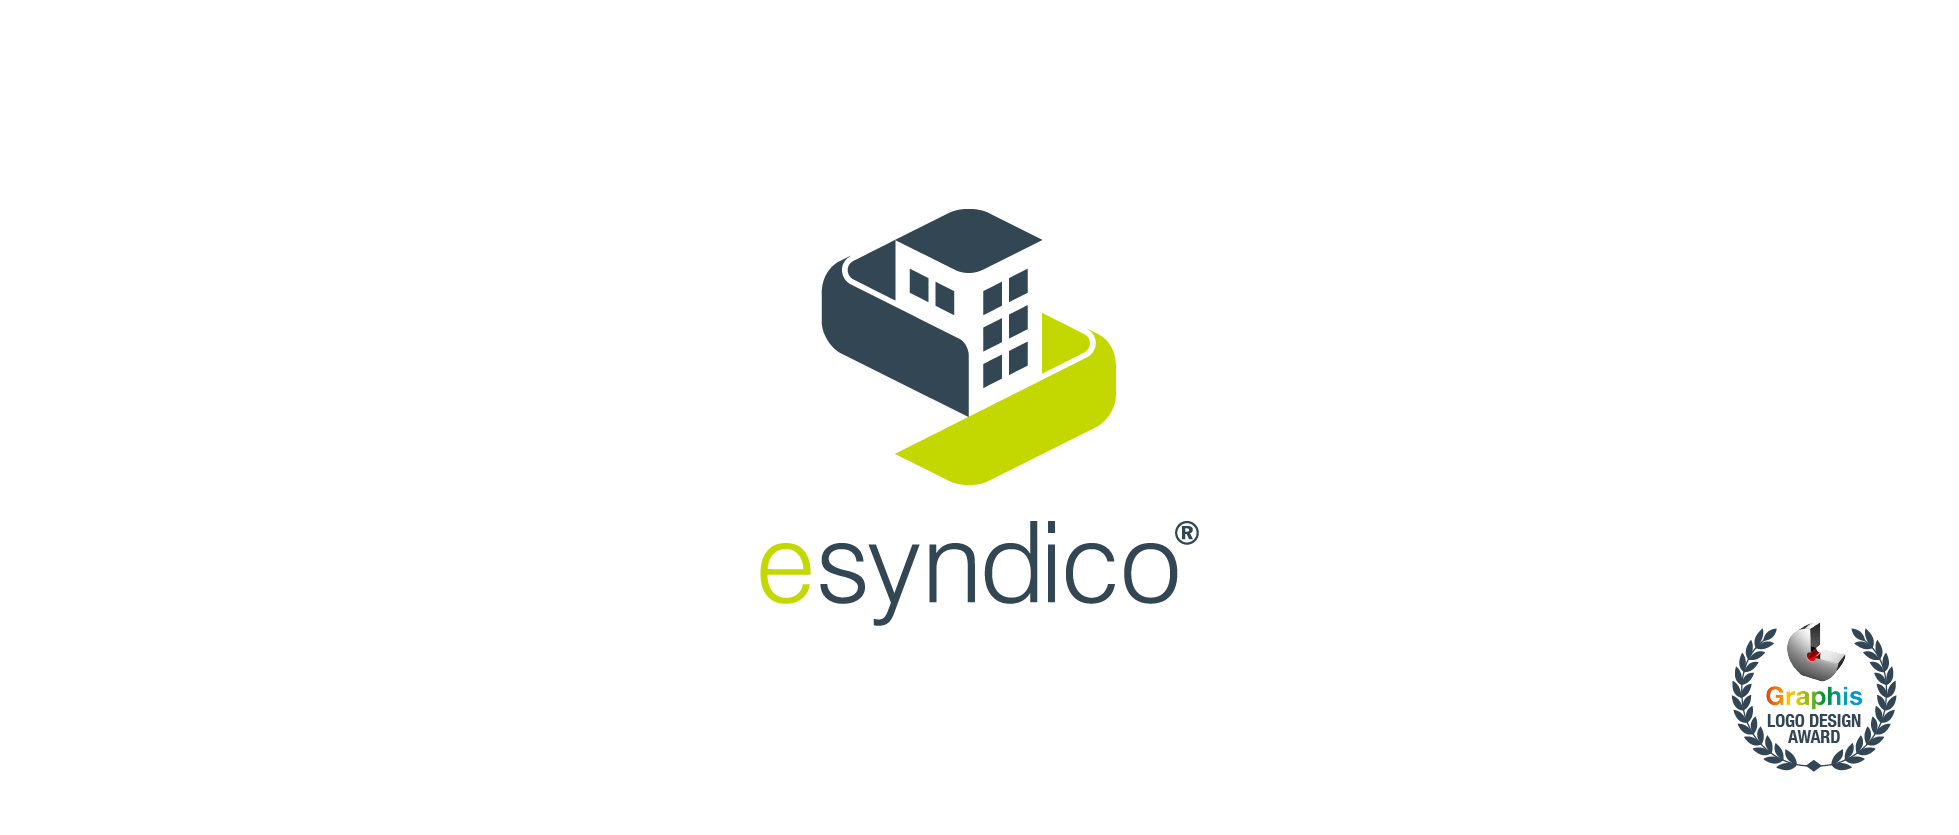 esyndico_brandmark